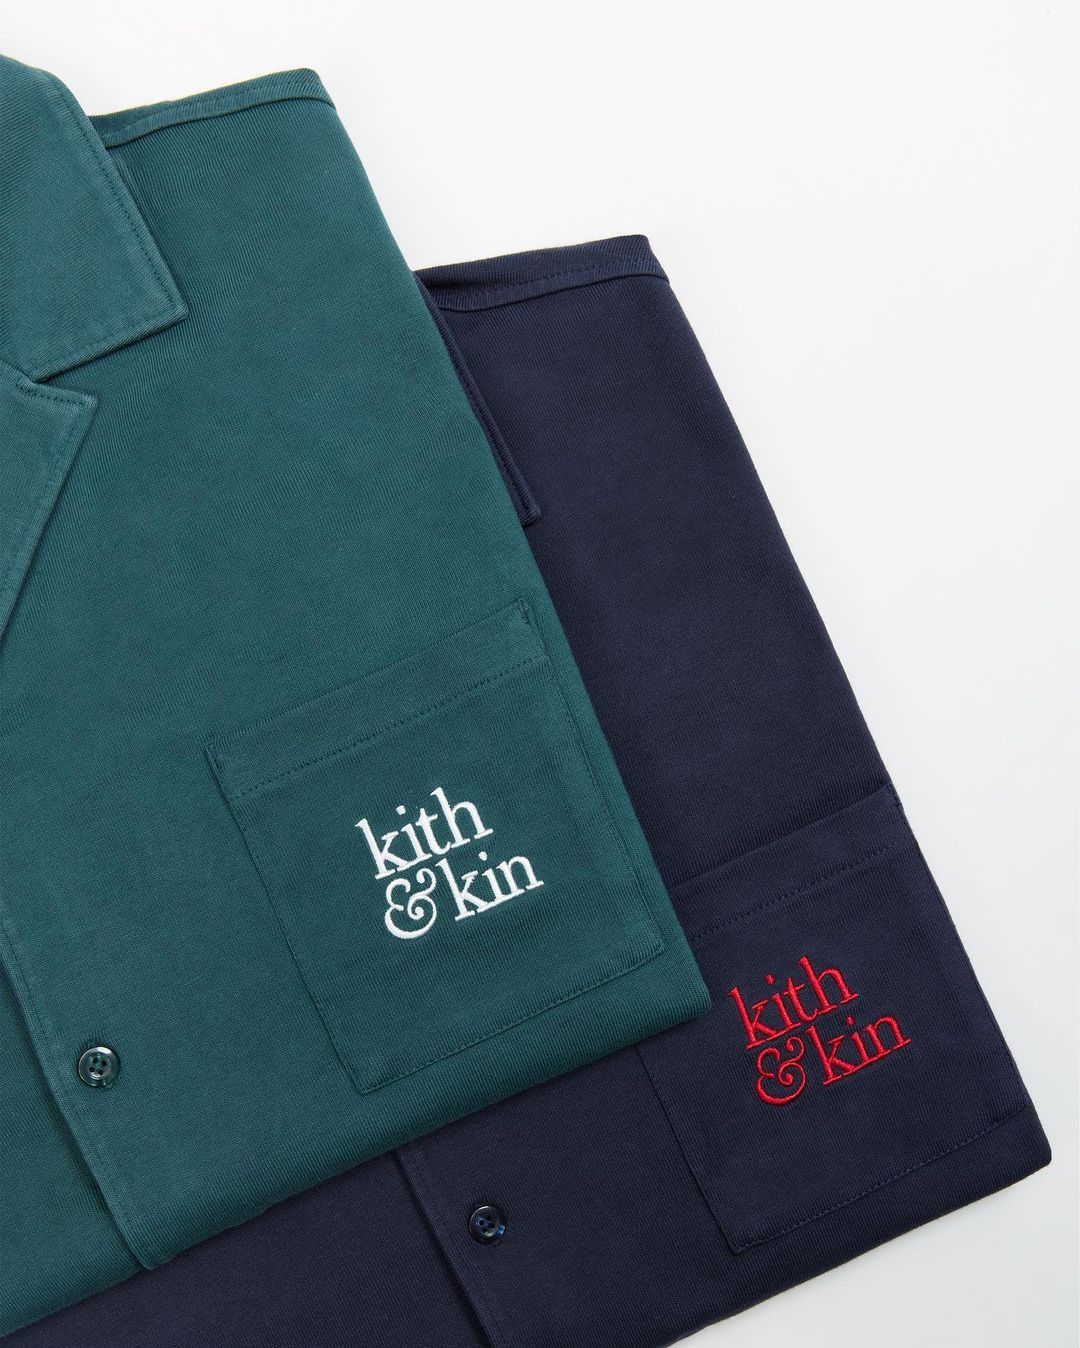 【Kith & Kin Pajama Shirt and Pant Set】 KITH MONDAY PROGRAM 2020年 第43弾が海外 12/21 発売 (キス)